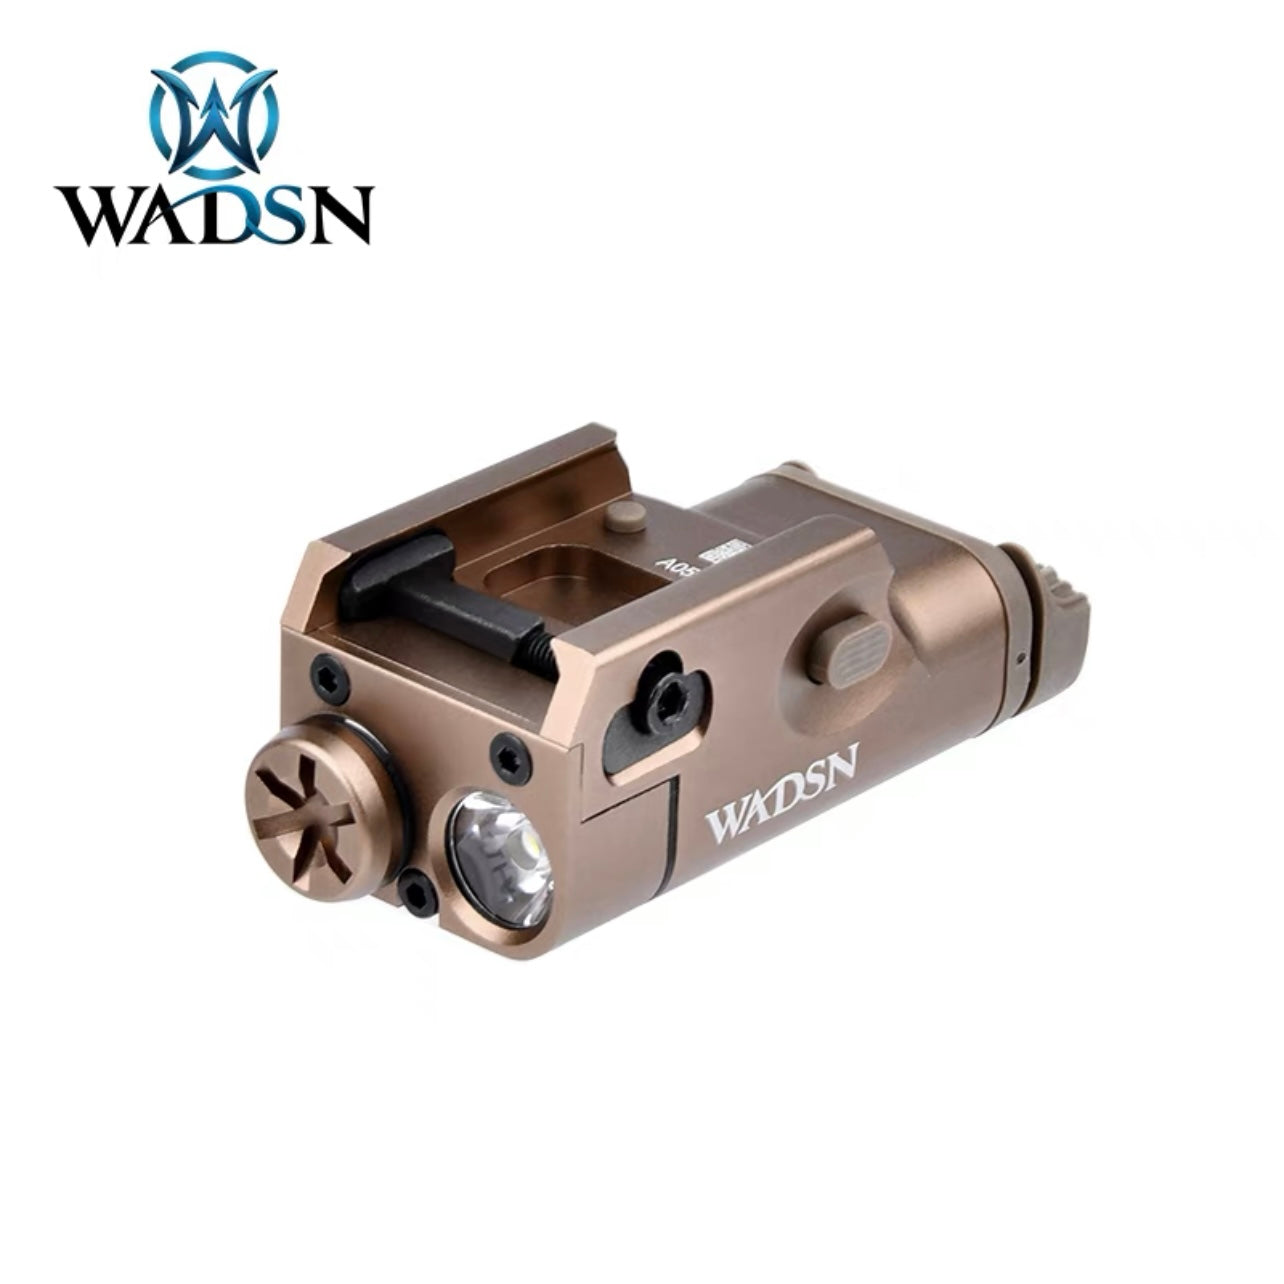 WADSN XC1 Compact Tactical Light LED Flashlight - TAN | APEXTAC GEAR